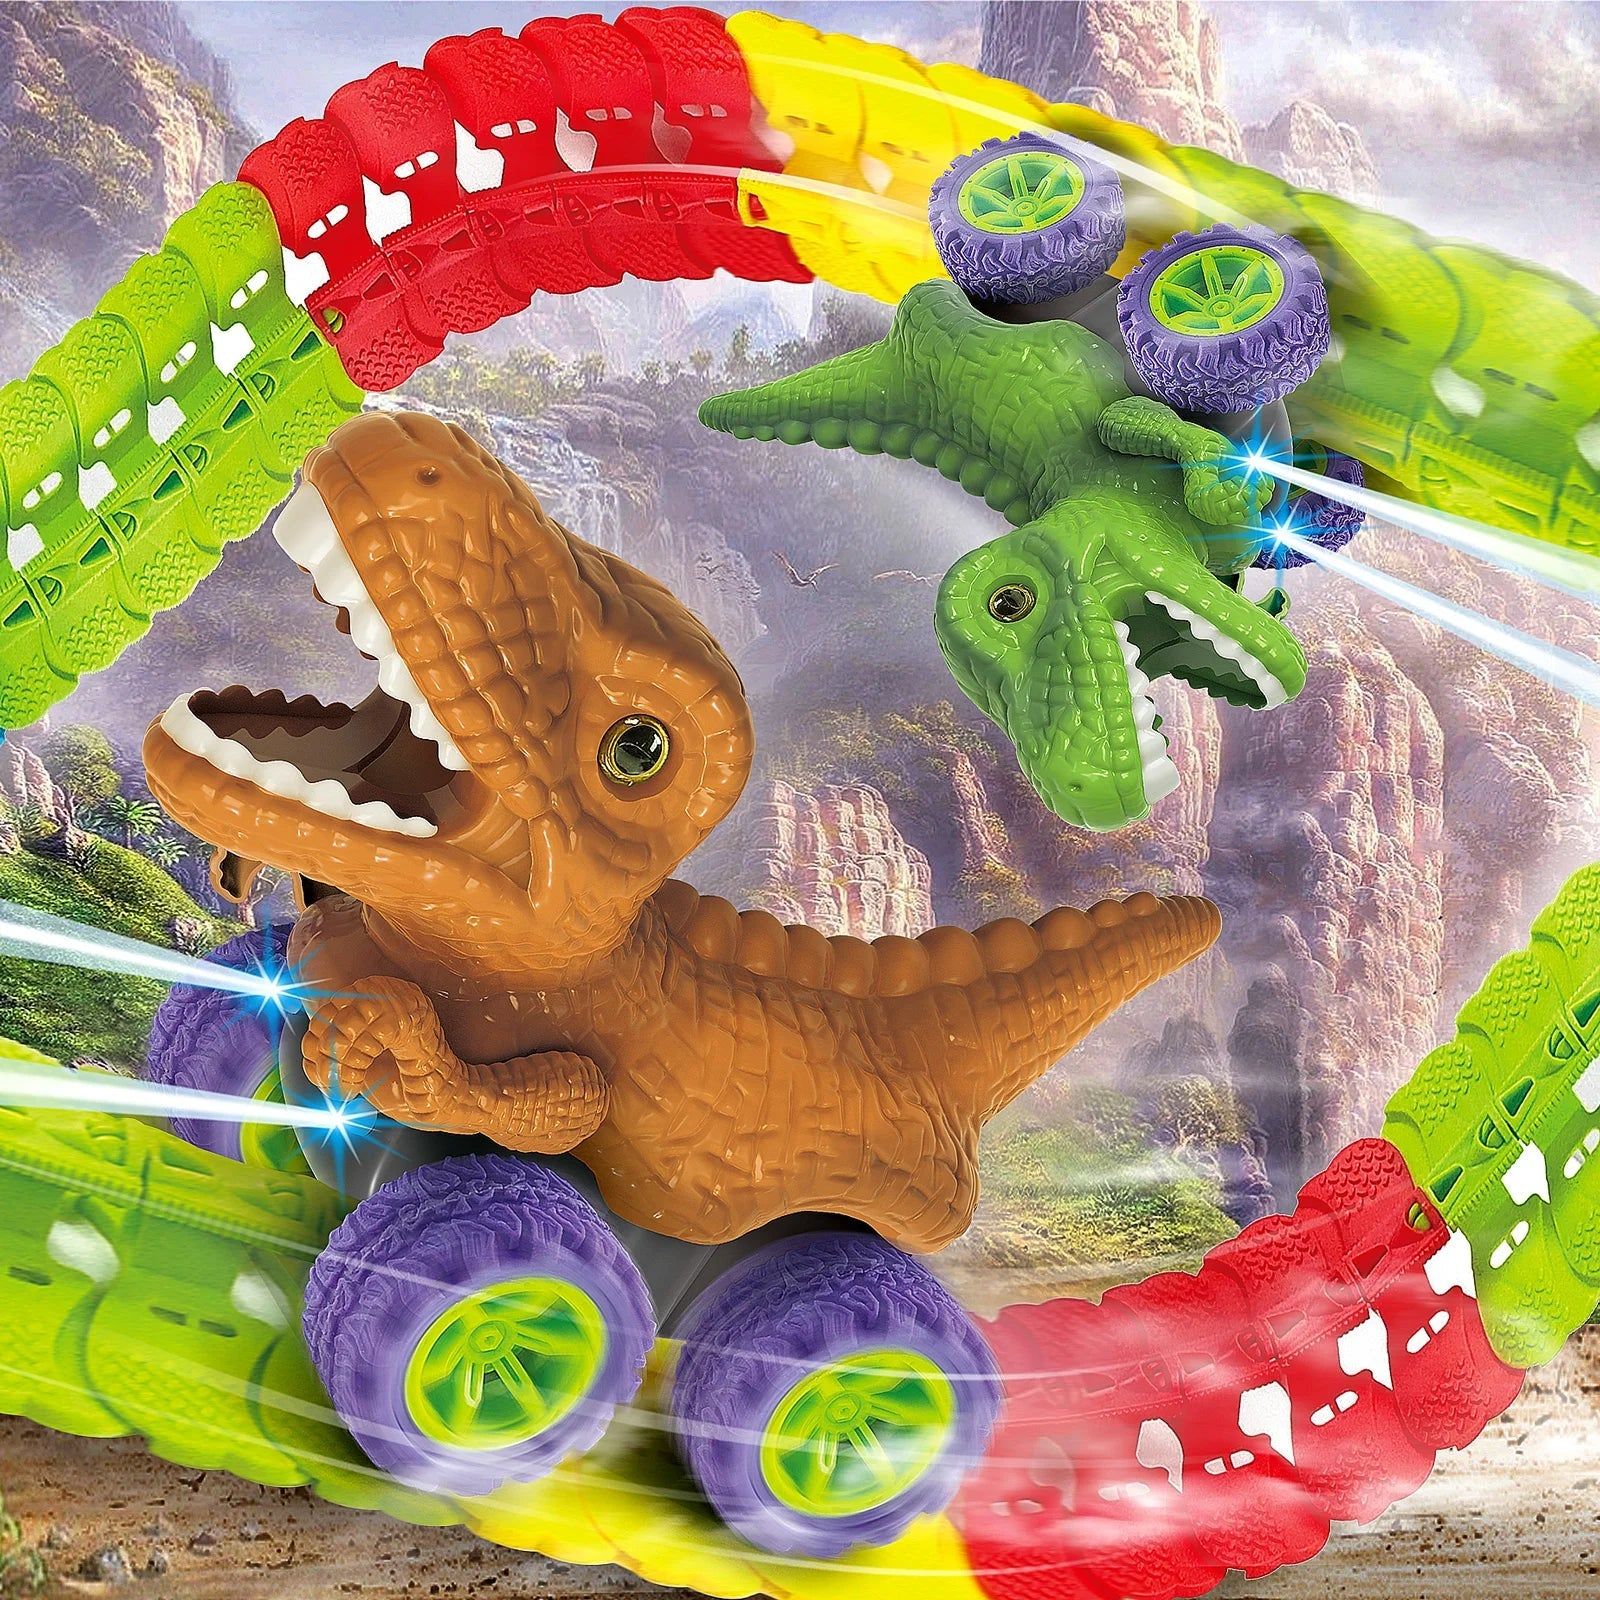 DinoFloat - Anti-Gravity Dinosaur Car - Luceroclub.com